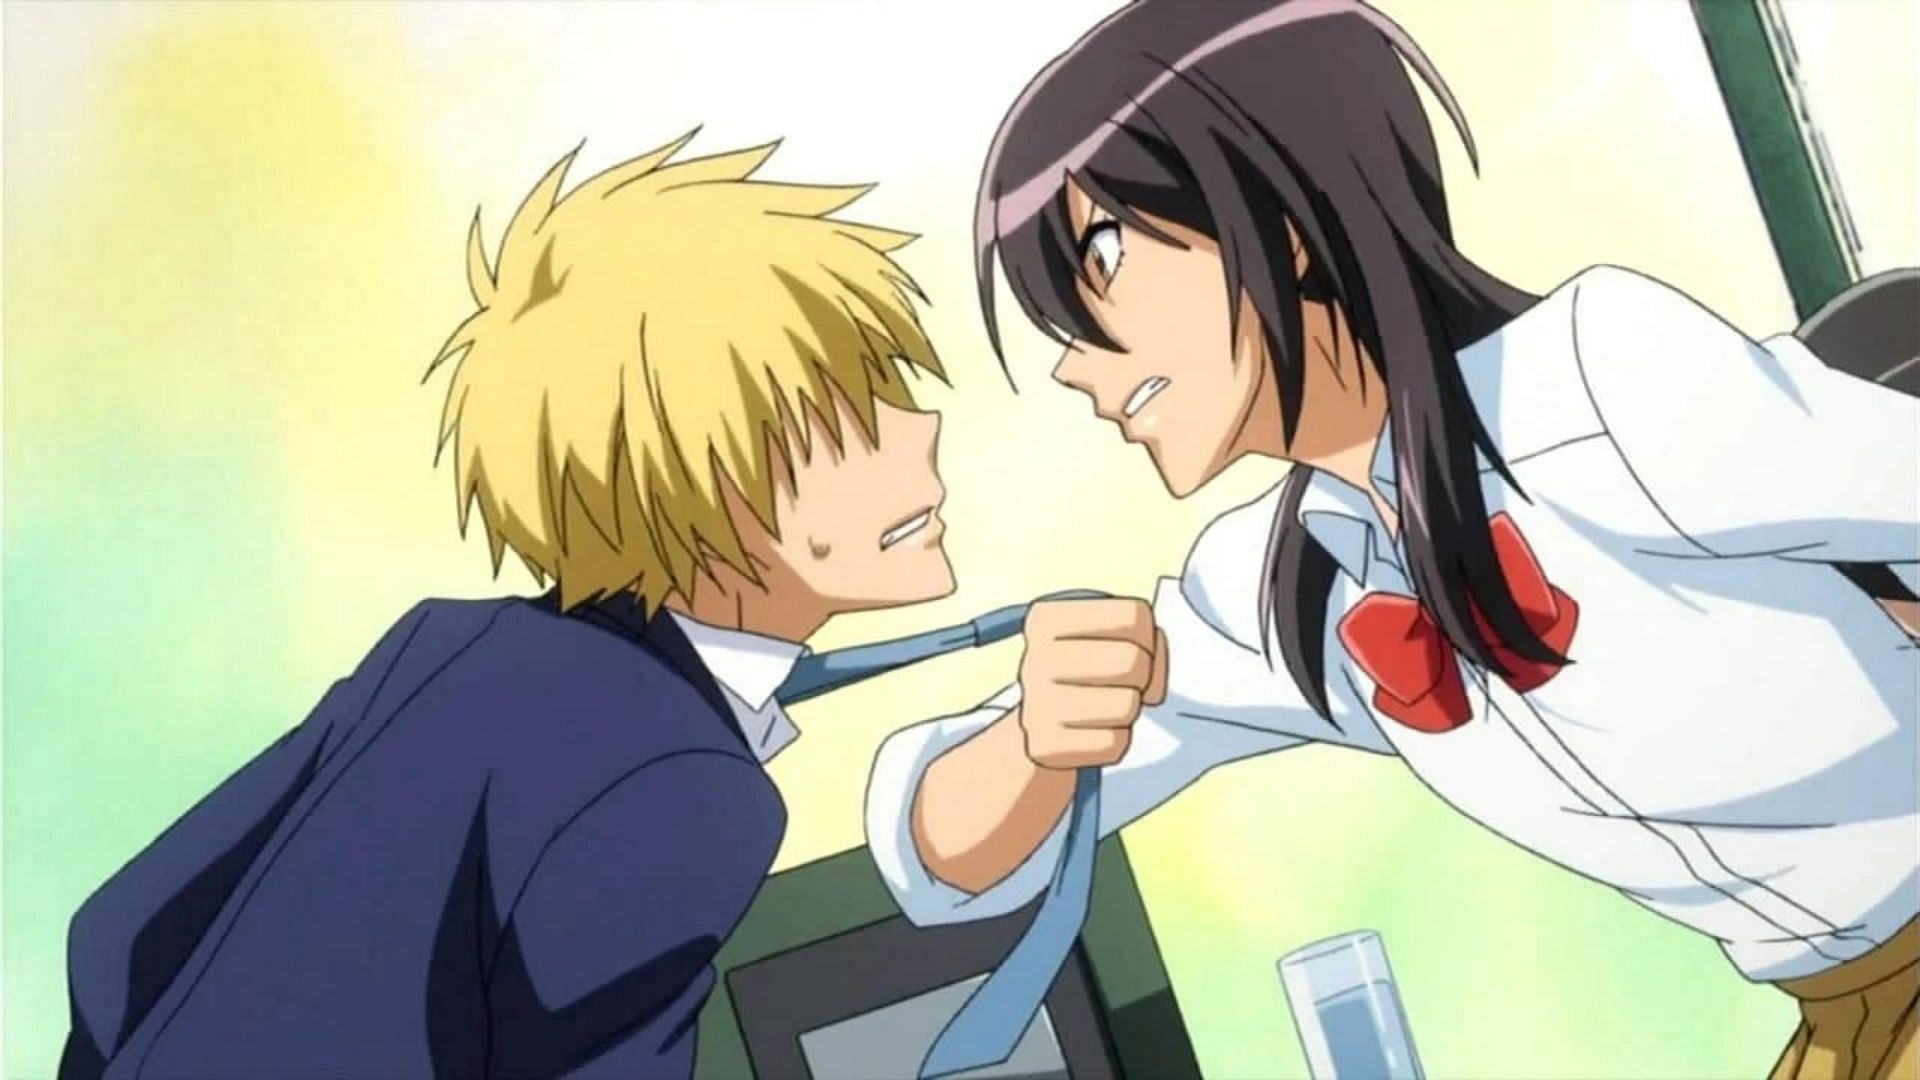 Misaki and Takumi as shown in the anime (Image via Studio J.C.Staff)